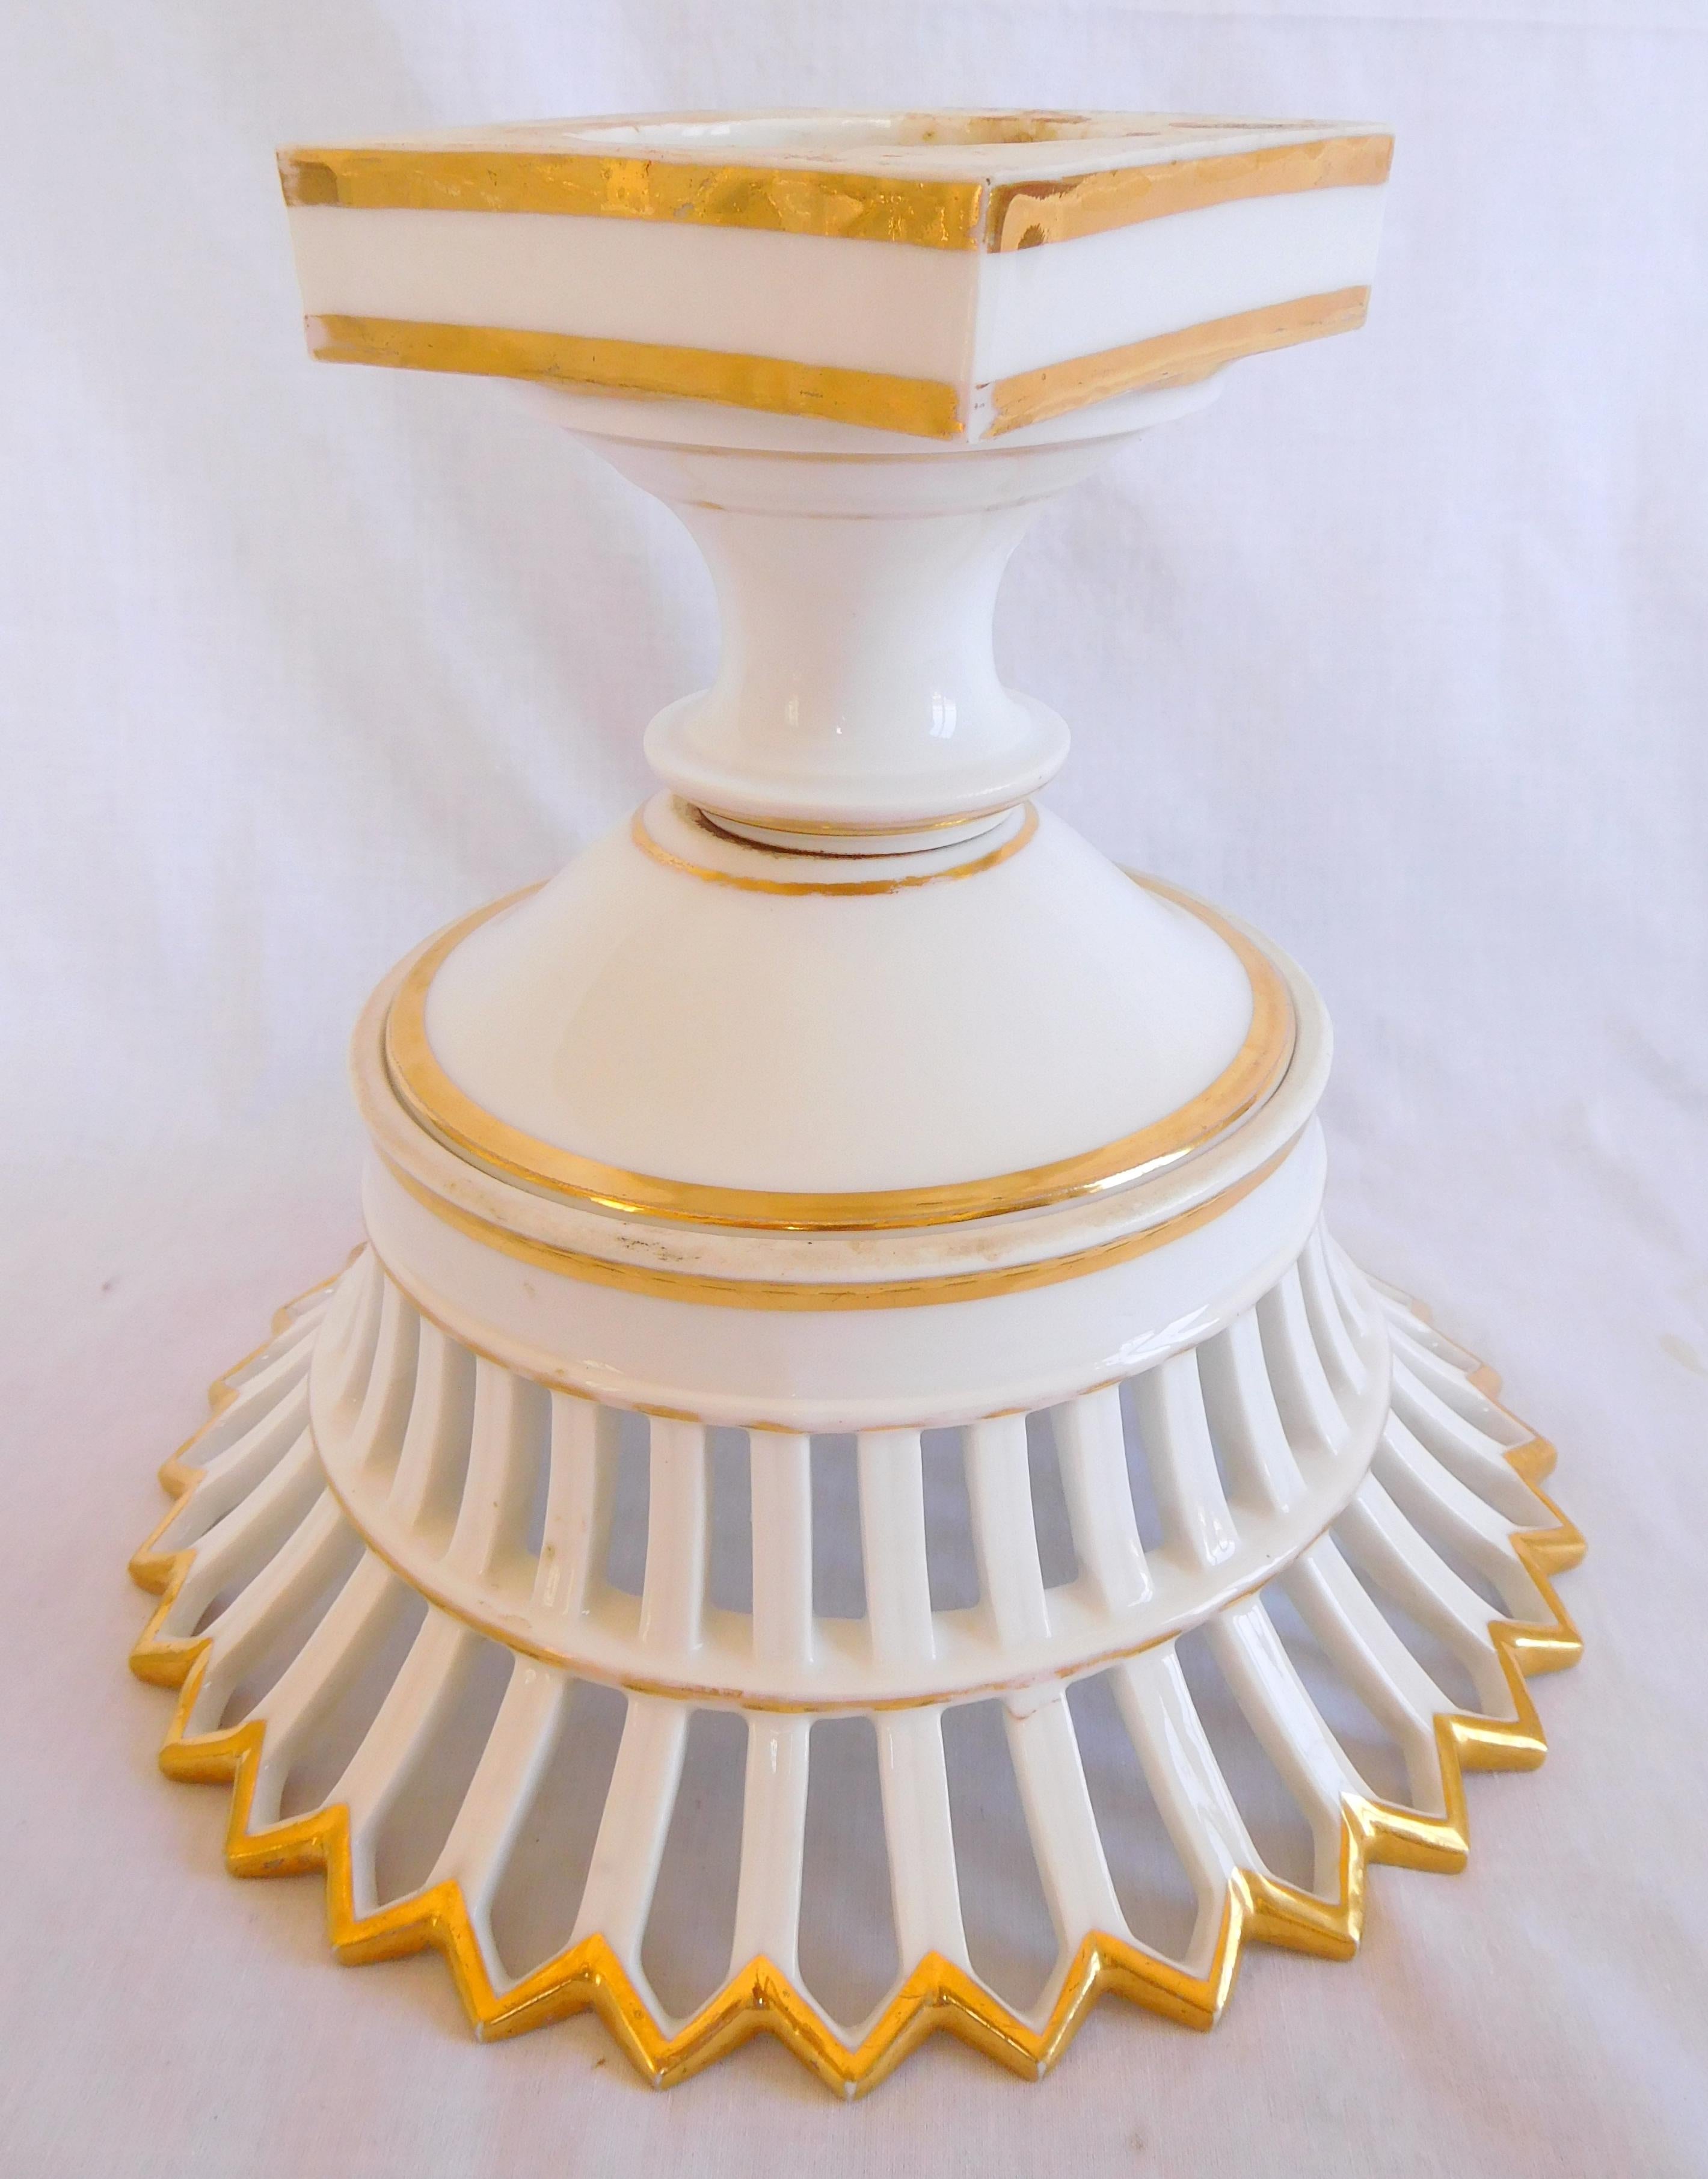 Empire Paris Porcelain Pierced Bowl Enhanced with Gold, 19th Century, circa 1830 2